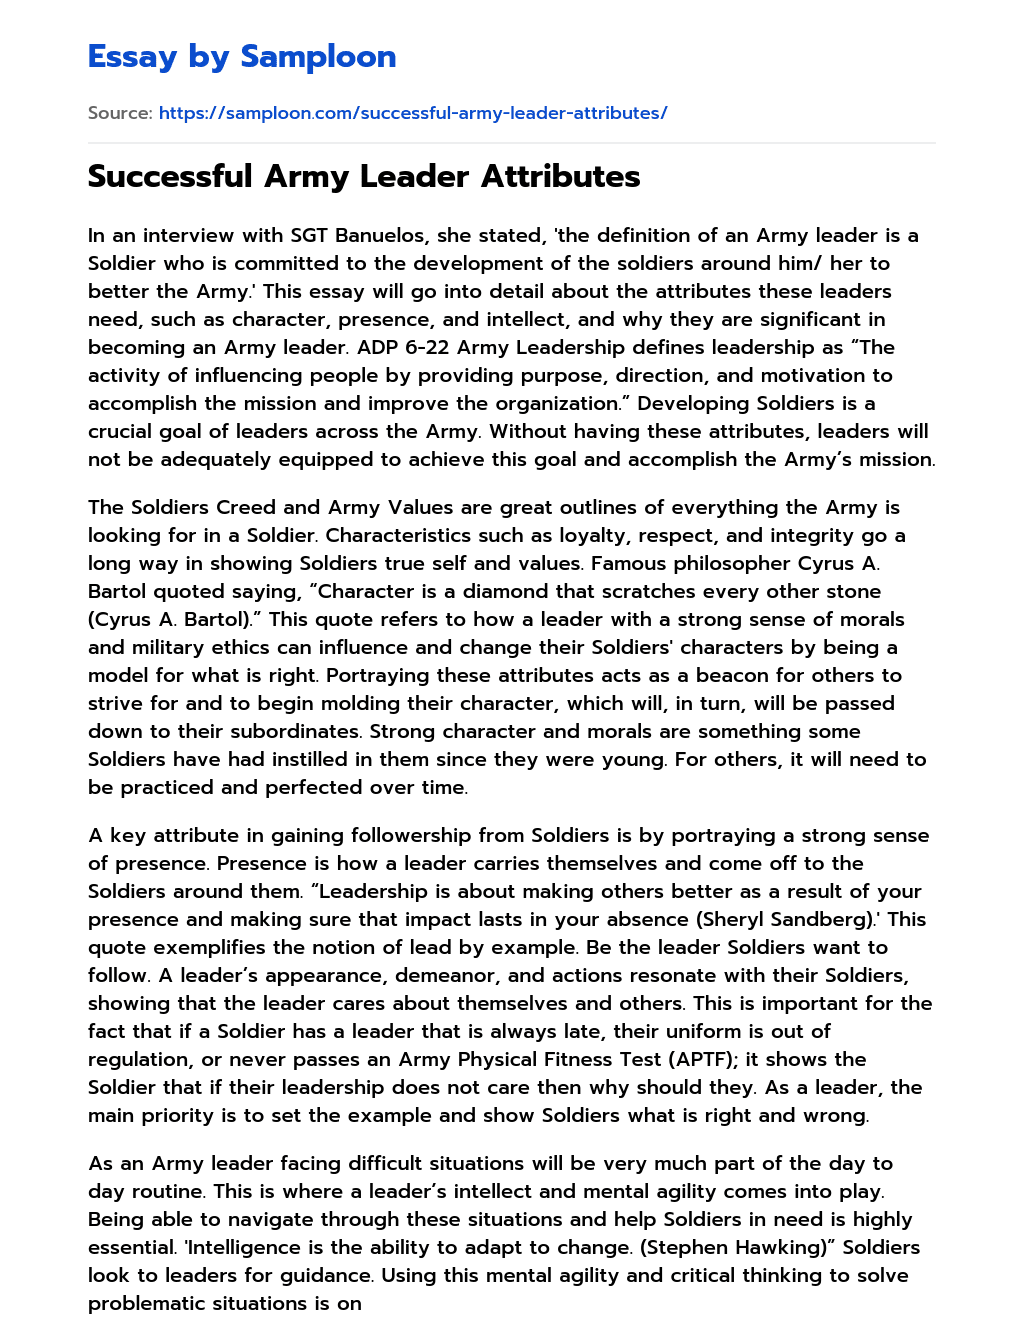 Successful Army Leader Attributes essay